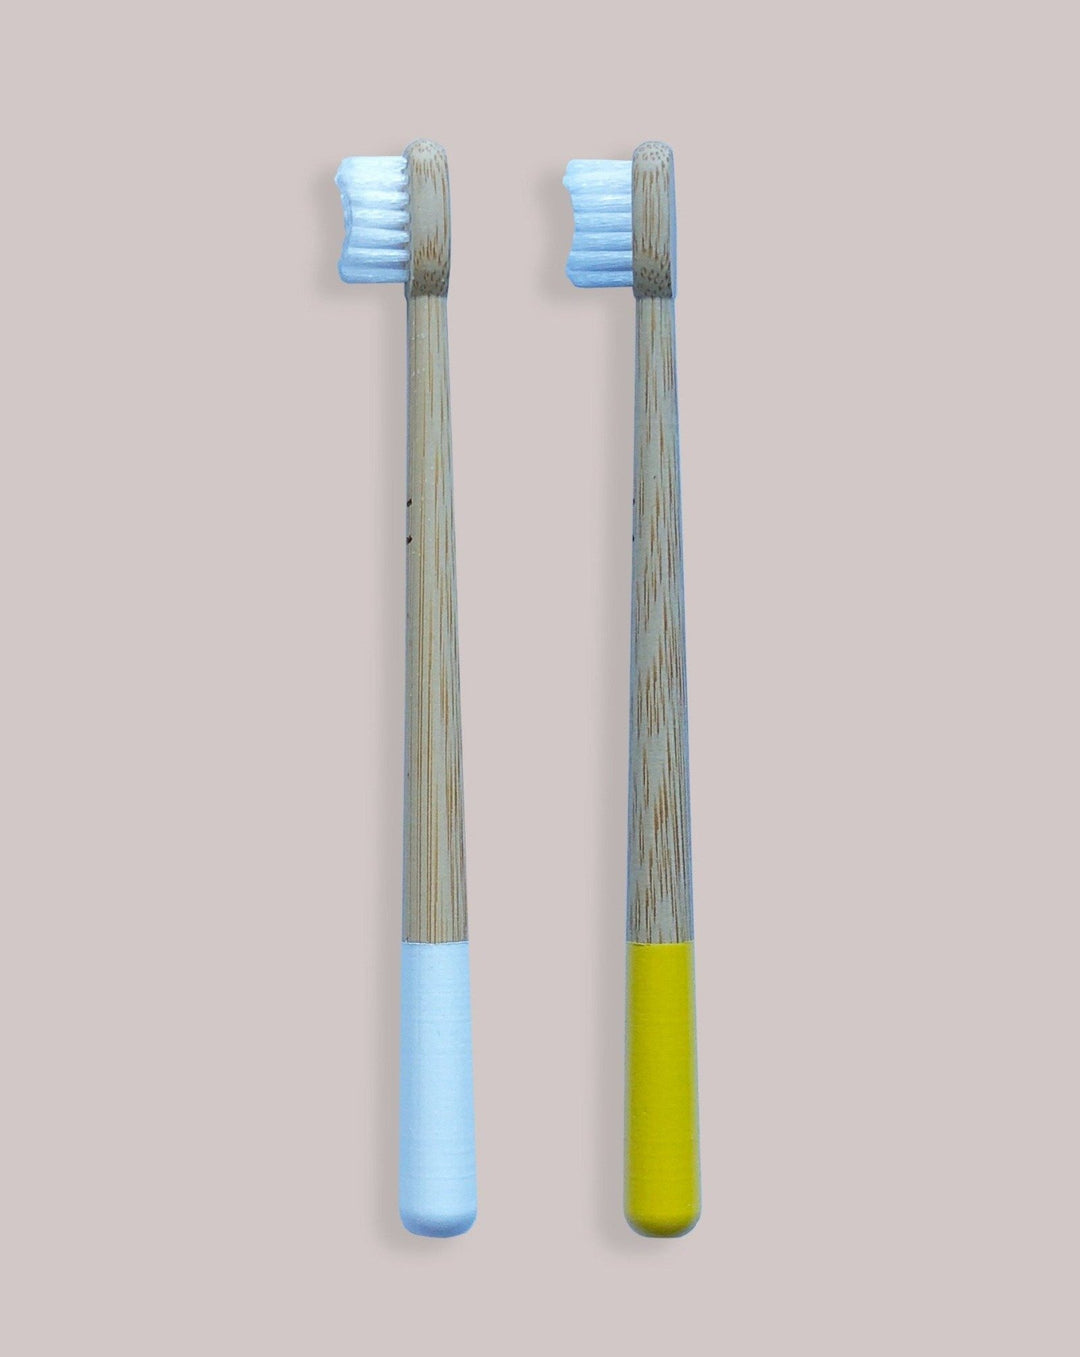 TRUTHBRUSH TOOTHBRUSH Tiny Toothbrush, Soft - Cloud White Tiny Kids Bamboo Toothbrush | Soft | Cloud White | 3133